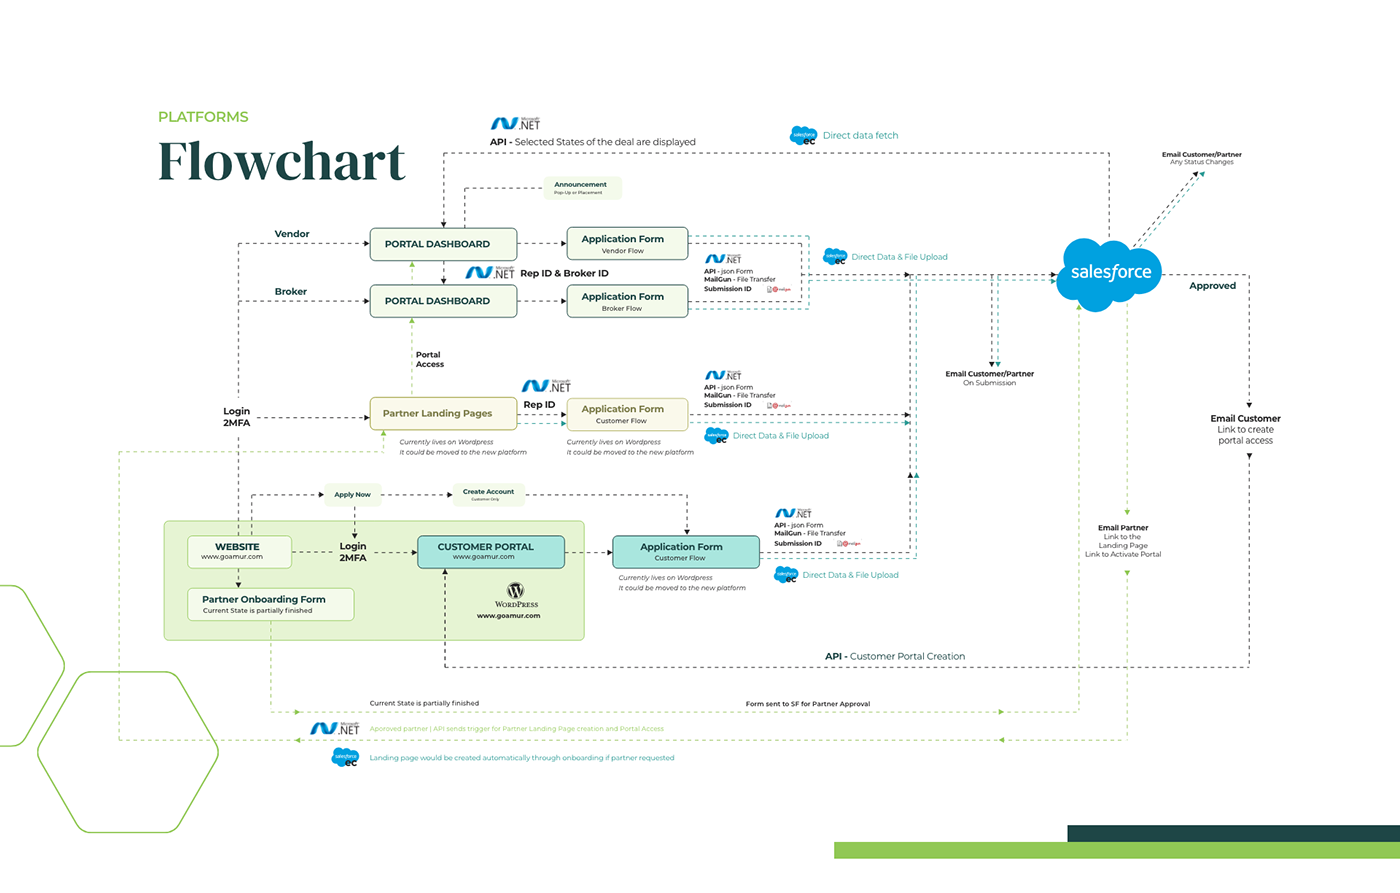 A flowchart of a partner portal architecture wordpress vs .net and API design to Salesforce